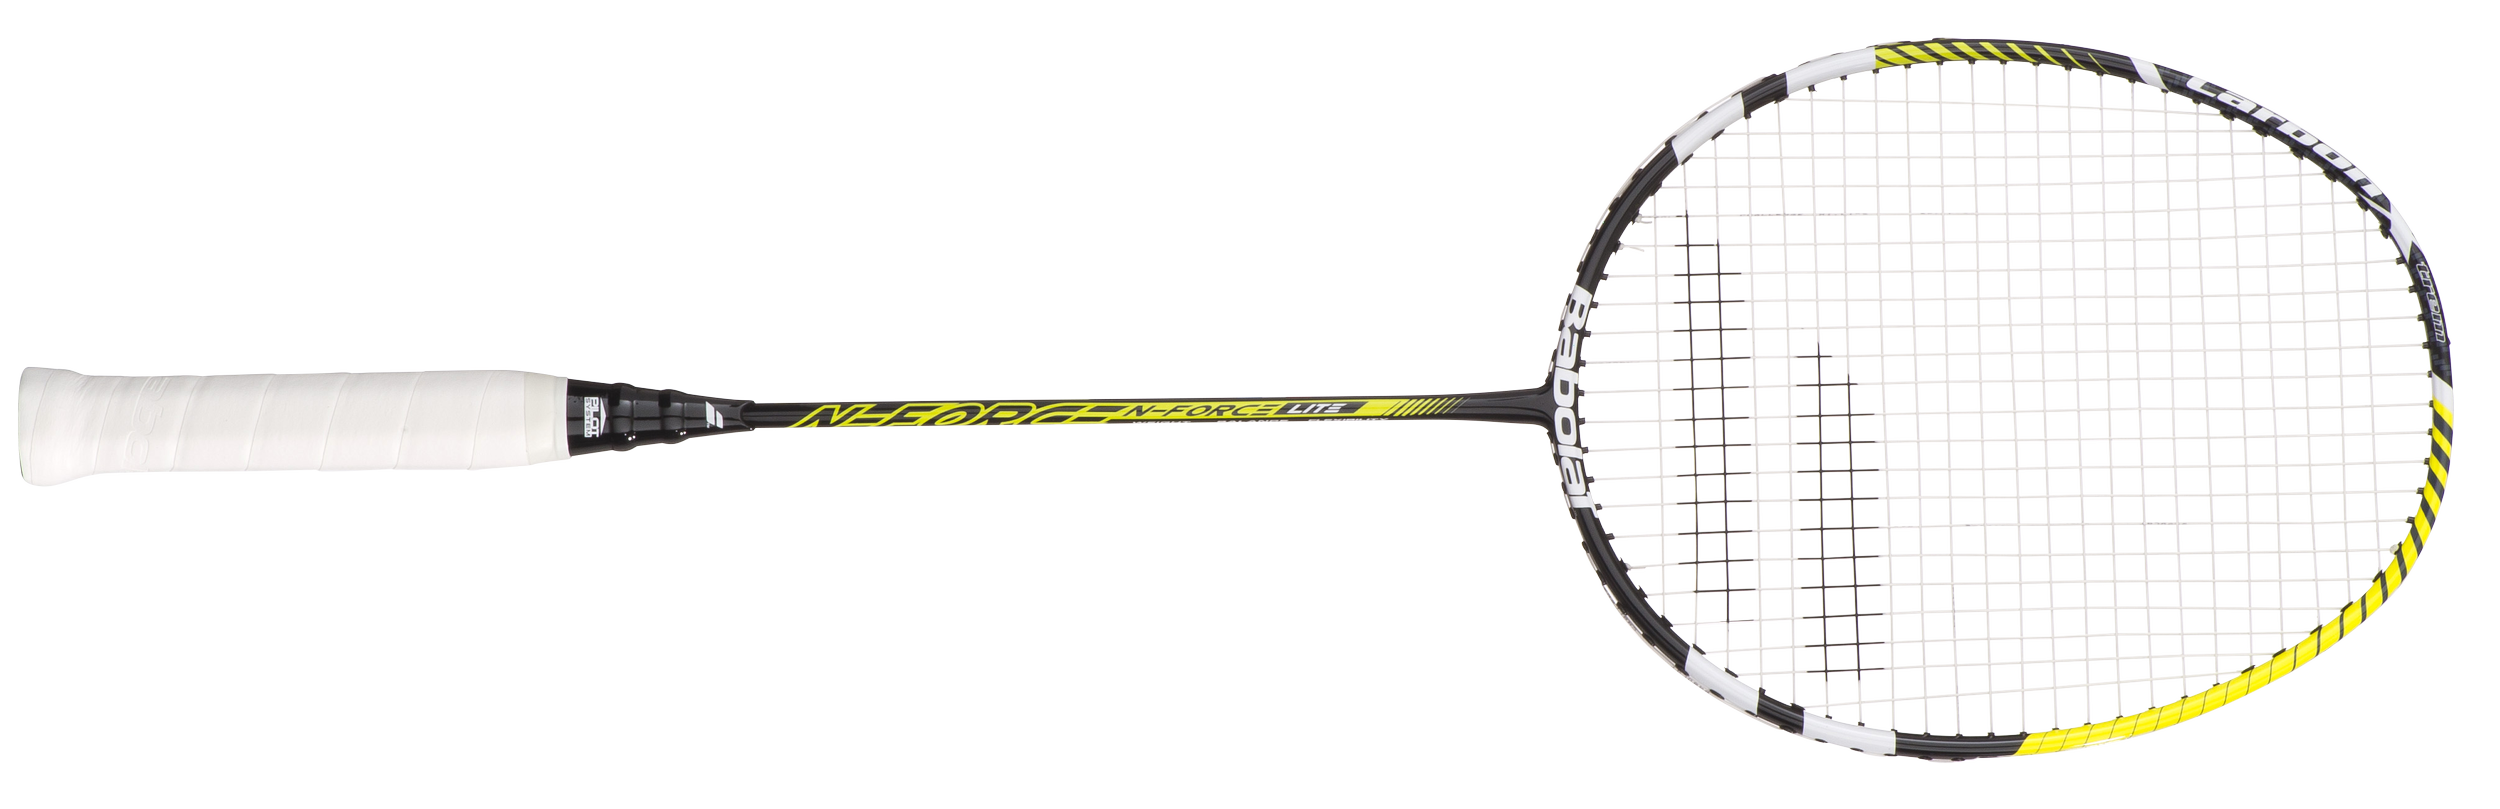 Badminton Racket Png Image - Badminton, Transparent background PNG HD thumbnail